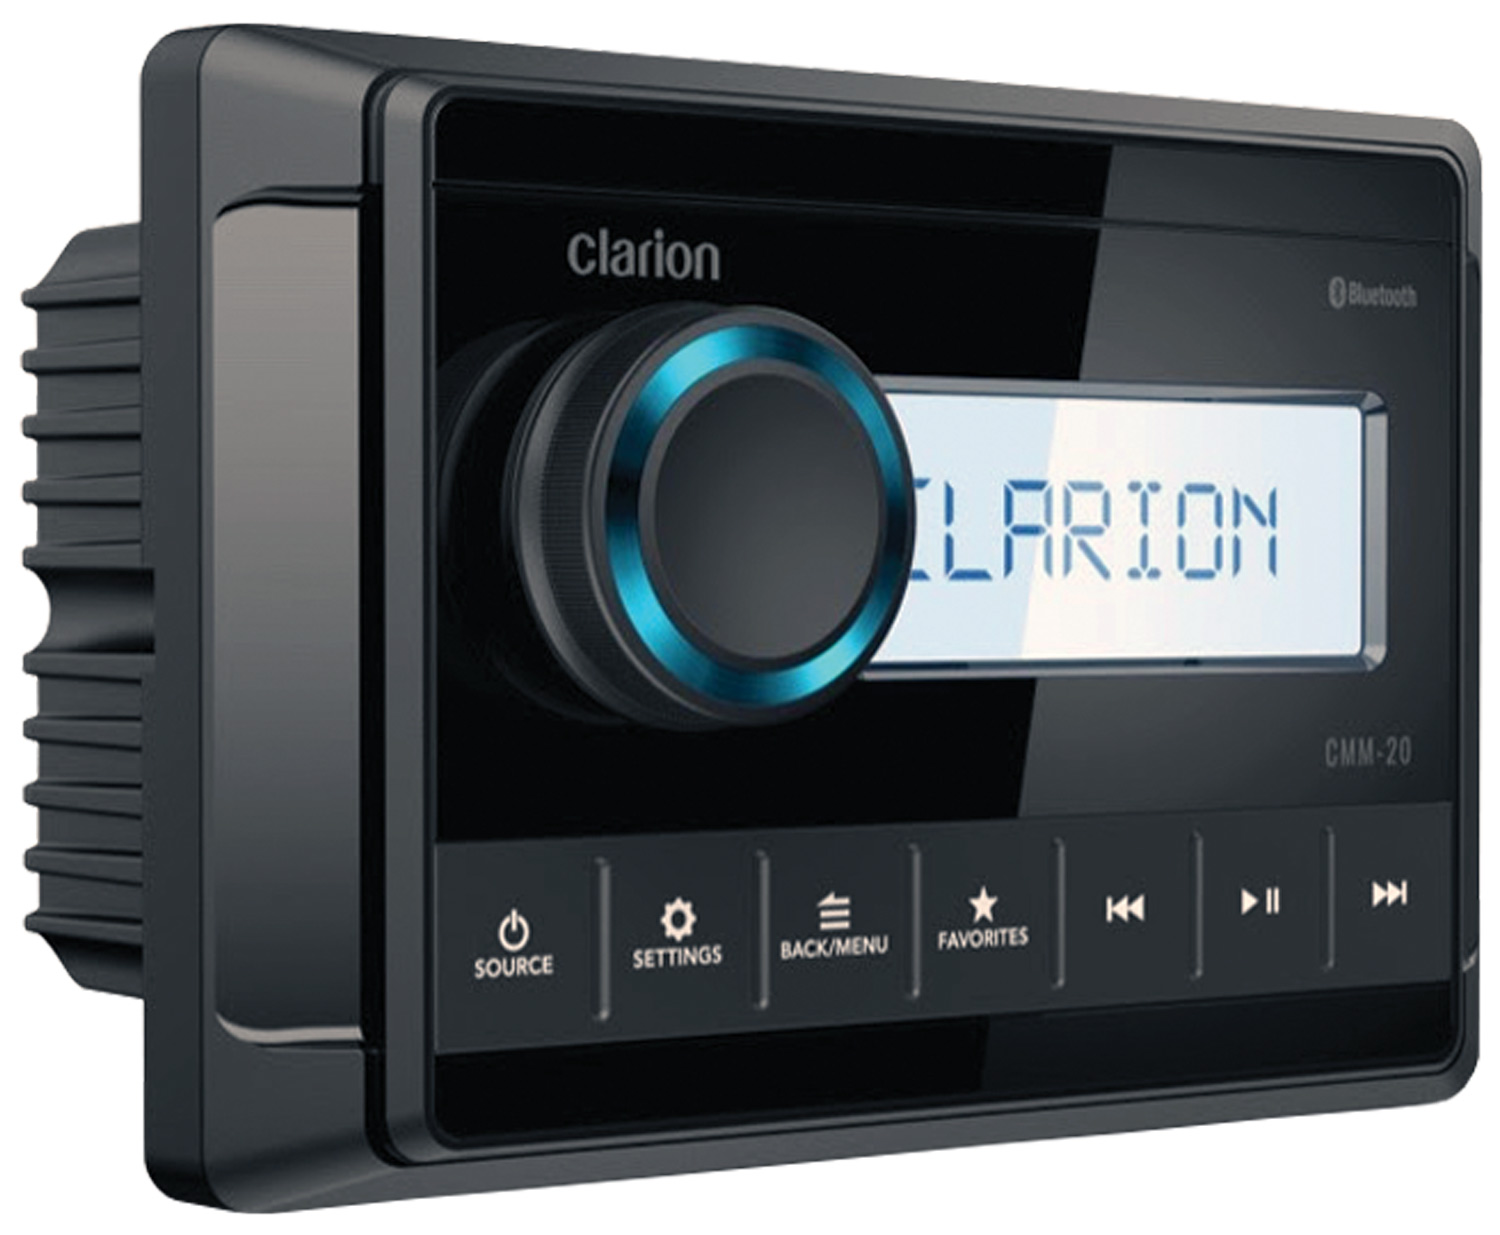 Clarion’s new CMM-20 multimedia source unit